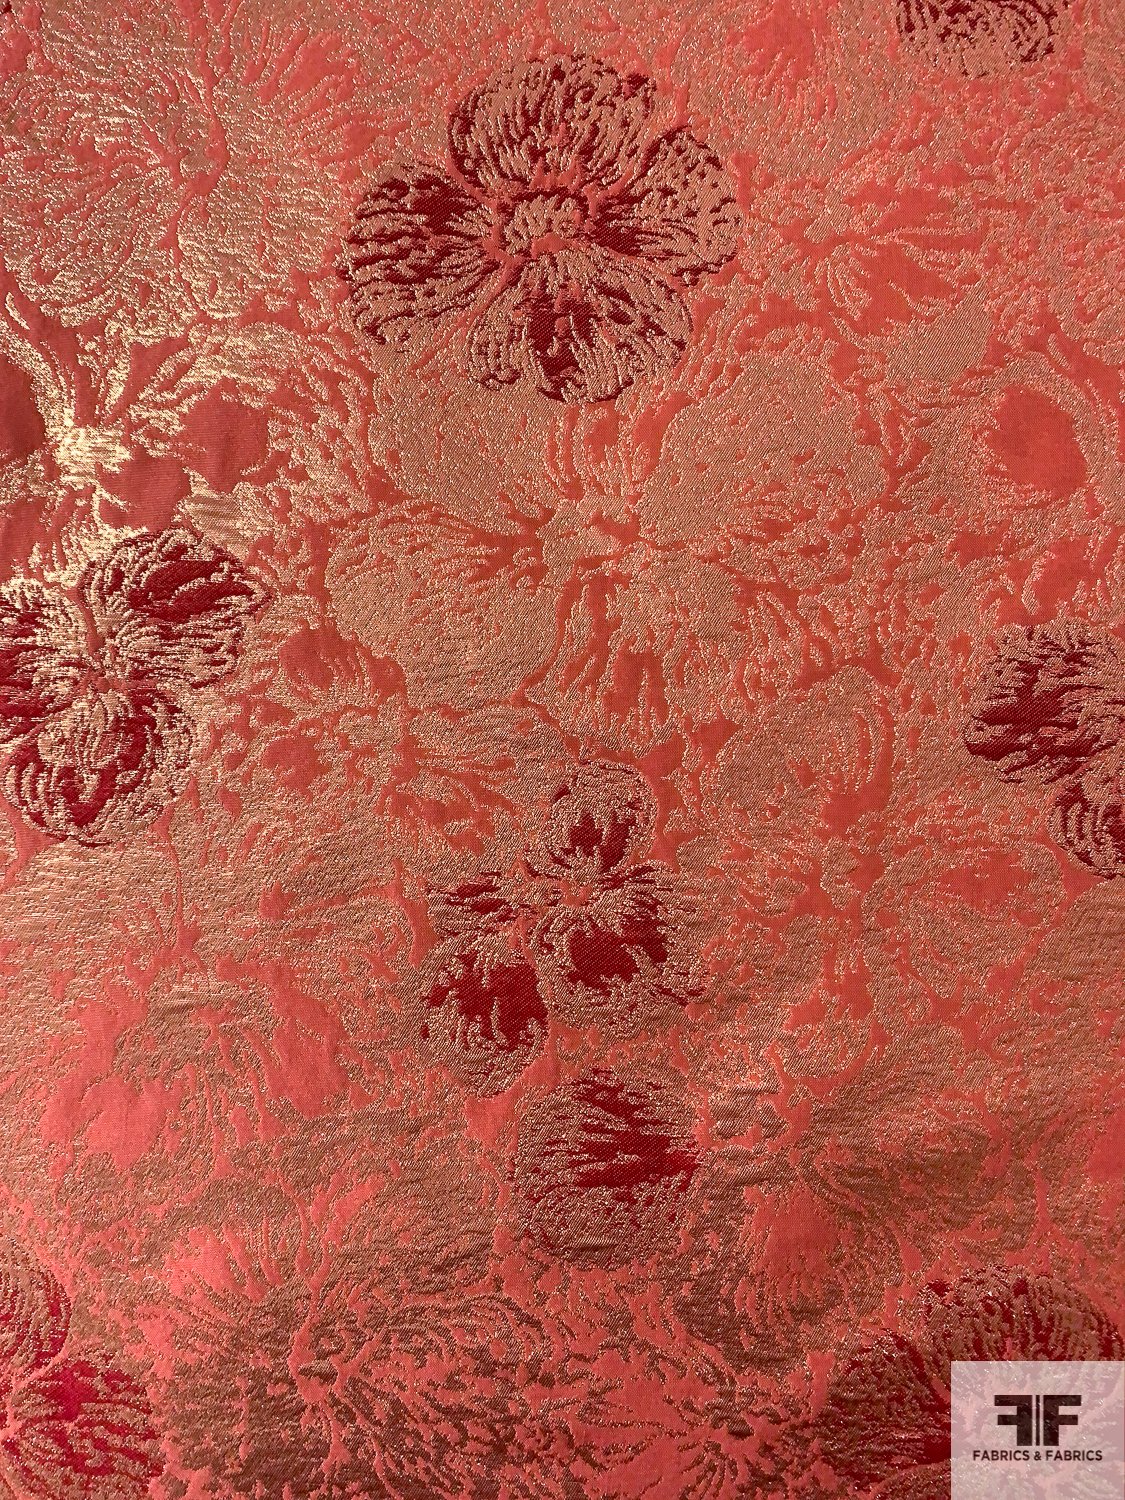 Italian Floral Metallic Brocade - Salmon Pink / Gold / Red